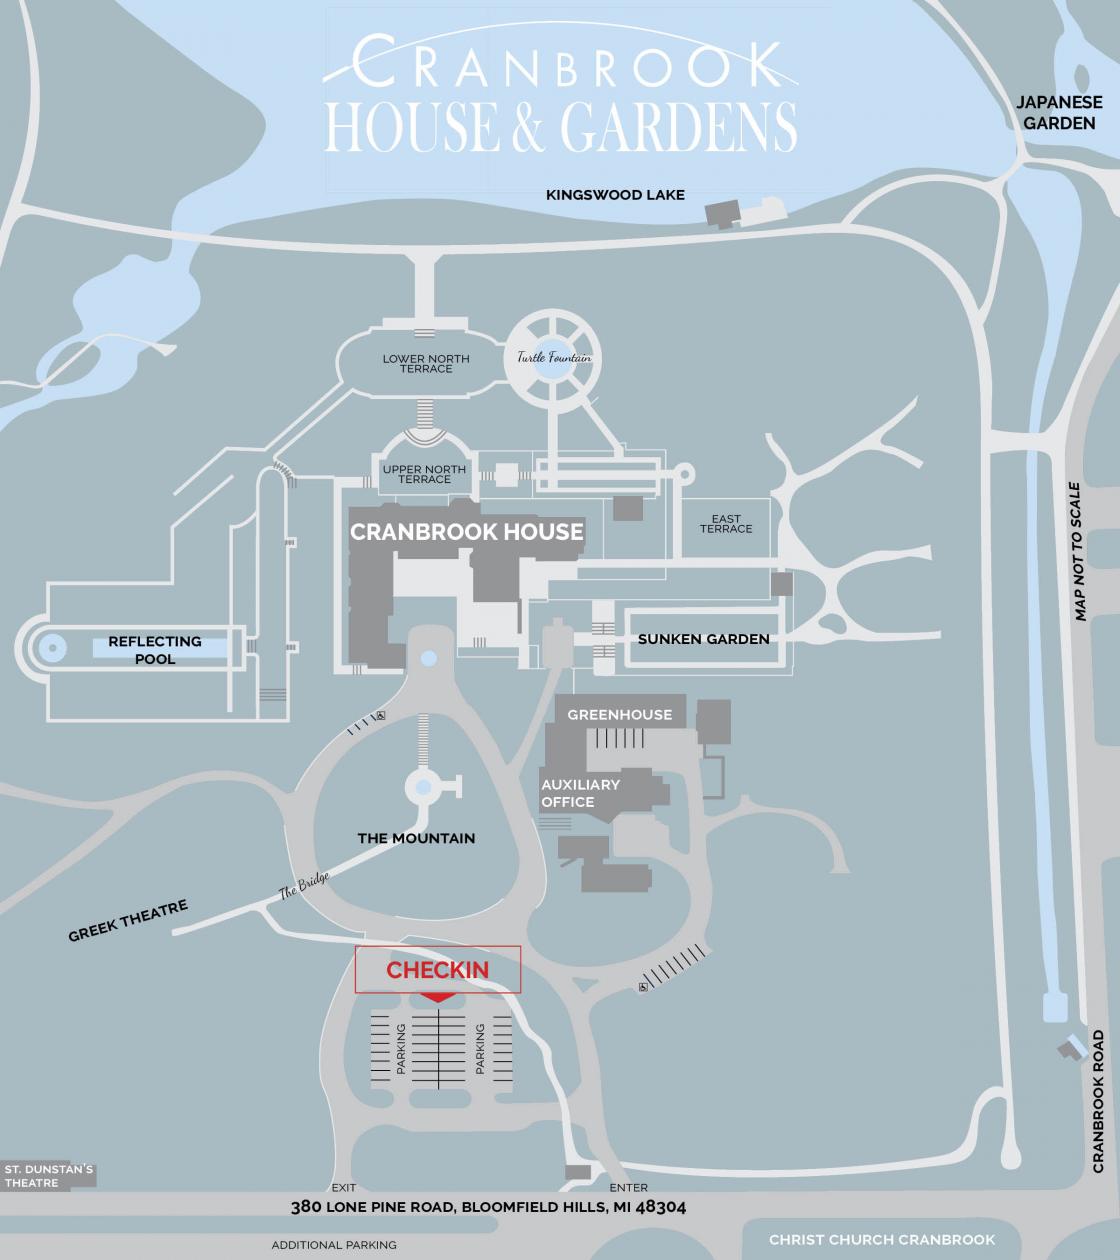 Cranbrook Gardens Tours 2020 - Map to Checkin.jpg